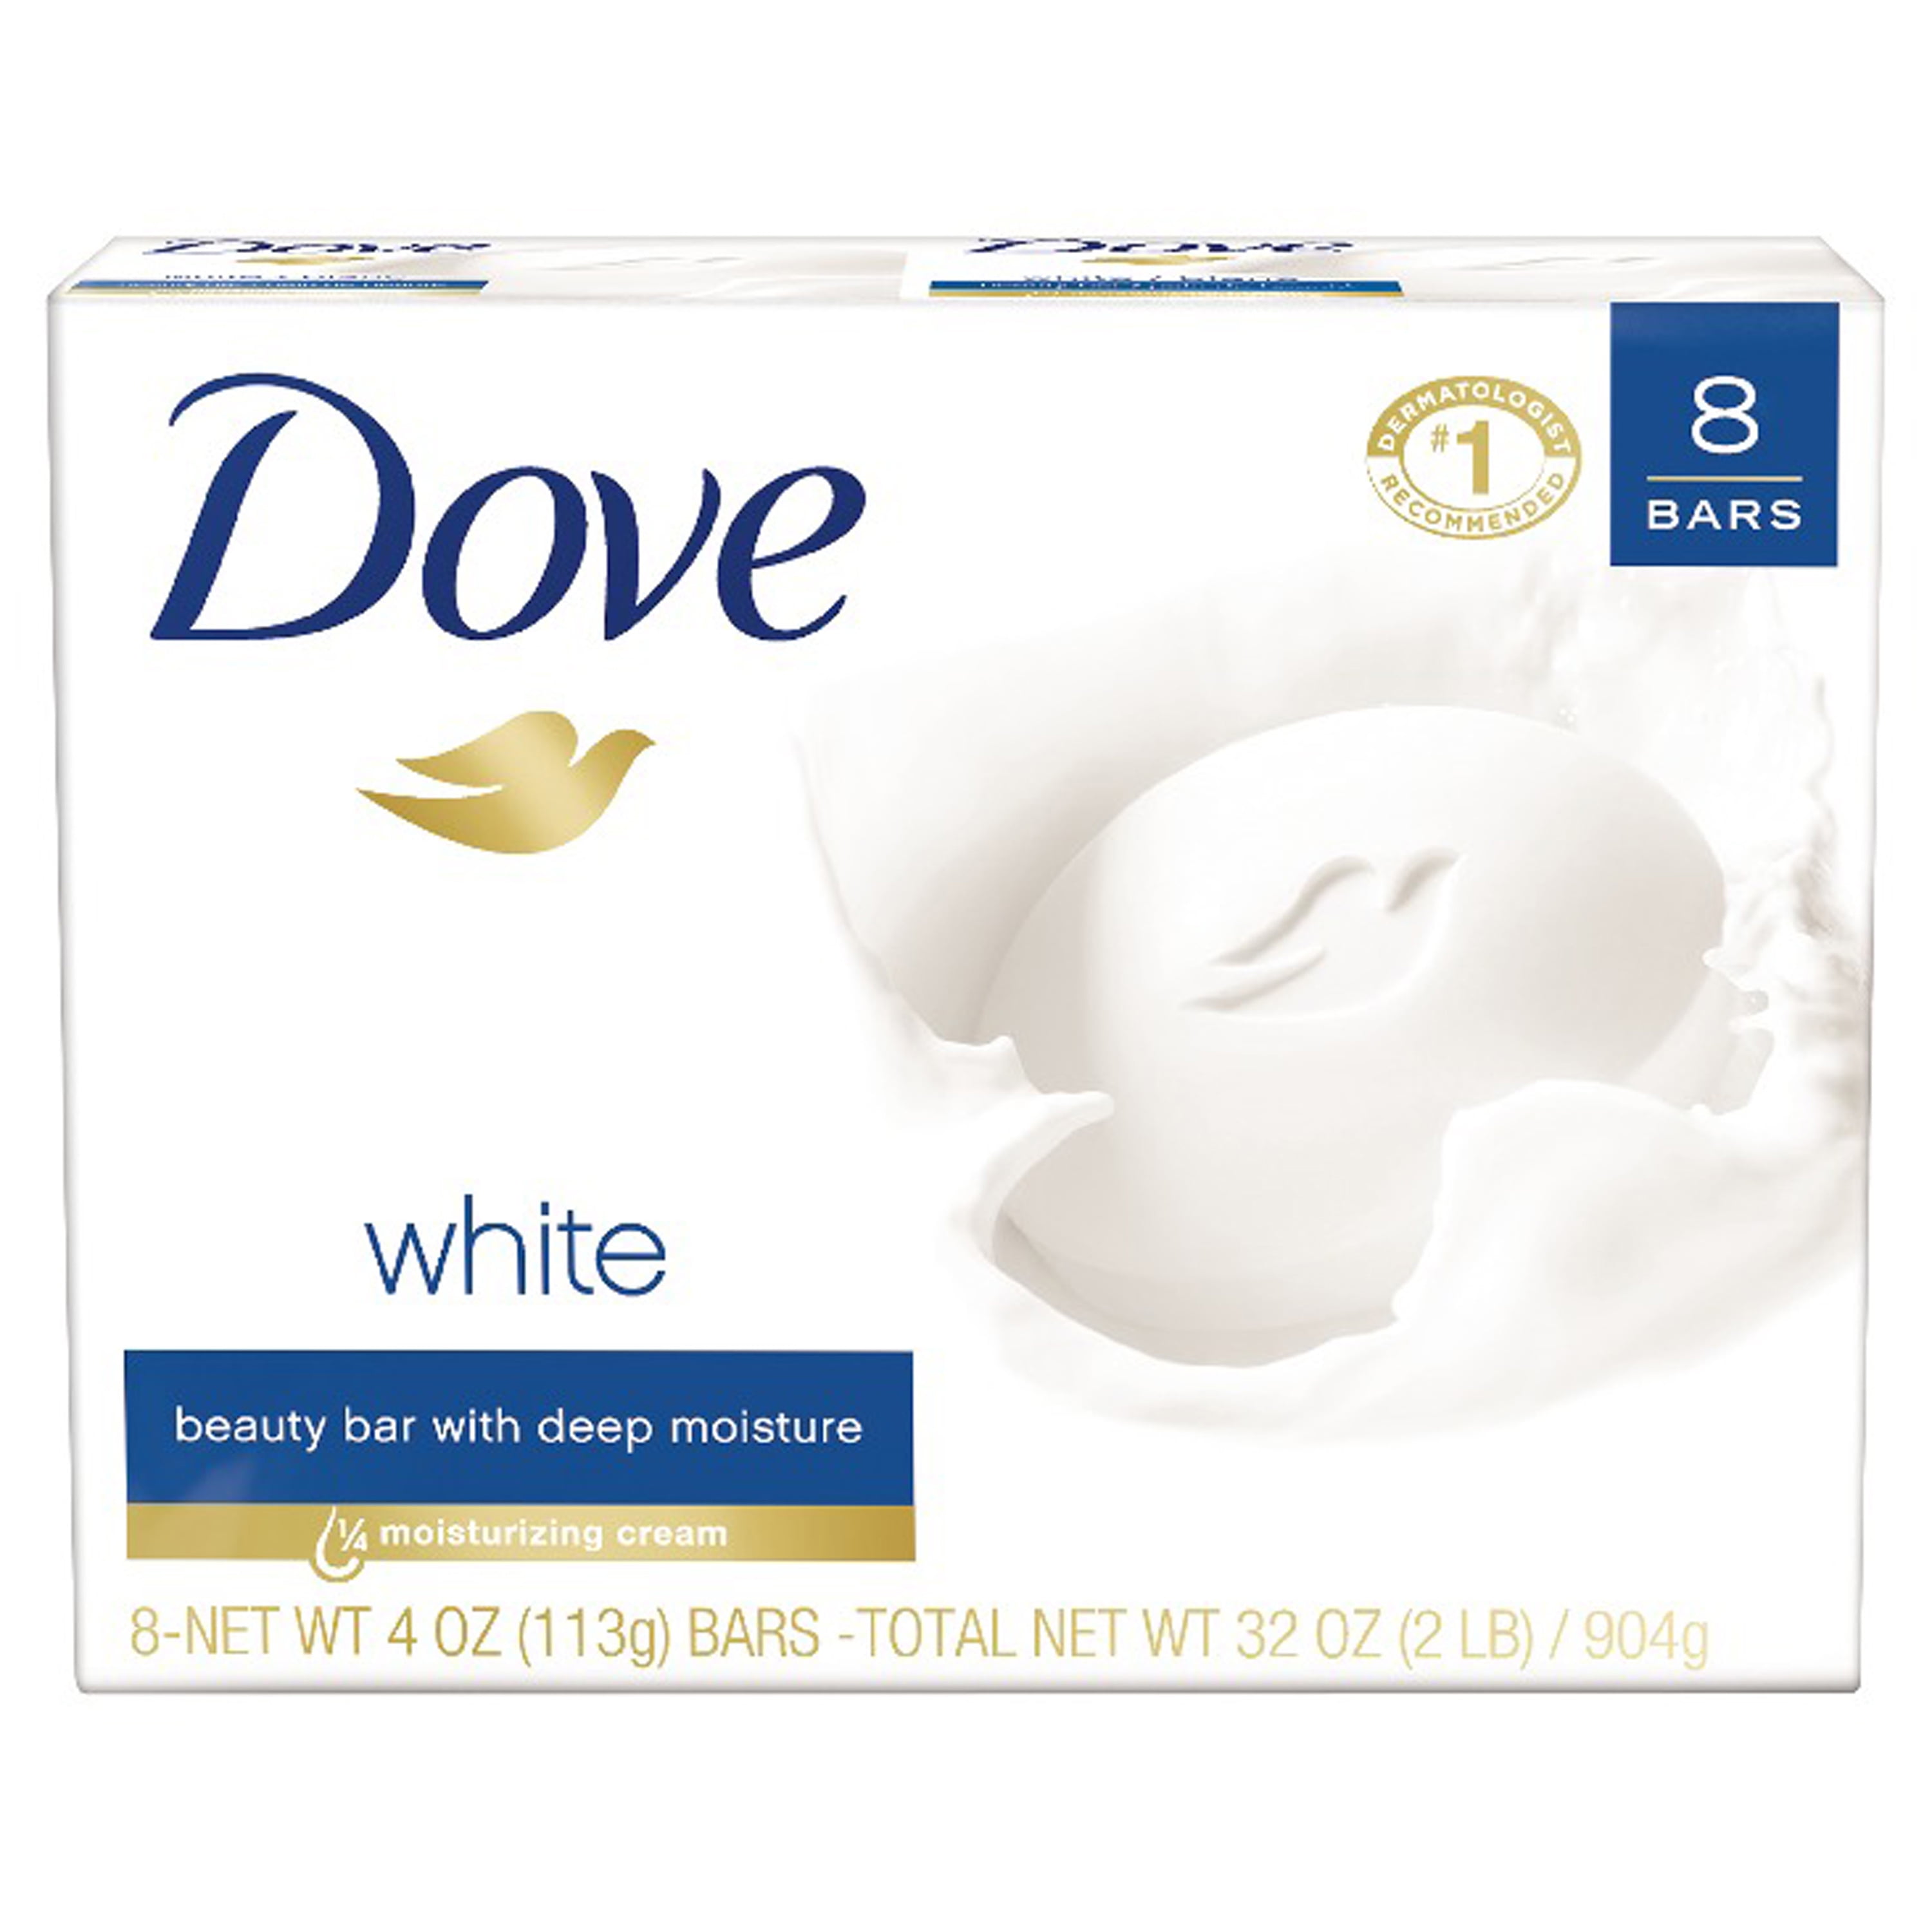 dove-beauty-bar-for-softer-skin-white-more-moisturizing-than-bar-soap-4